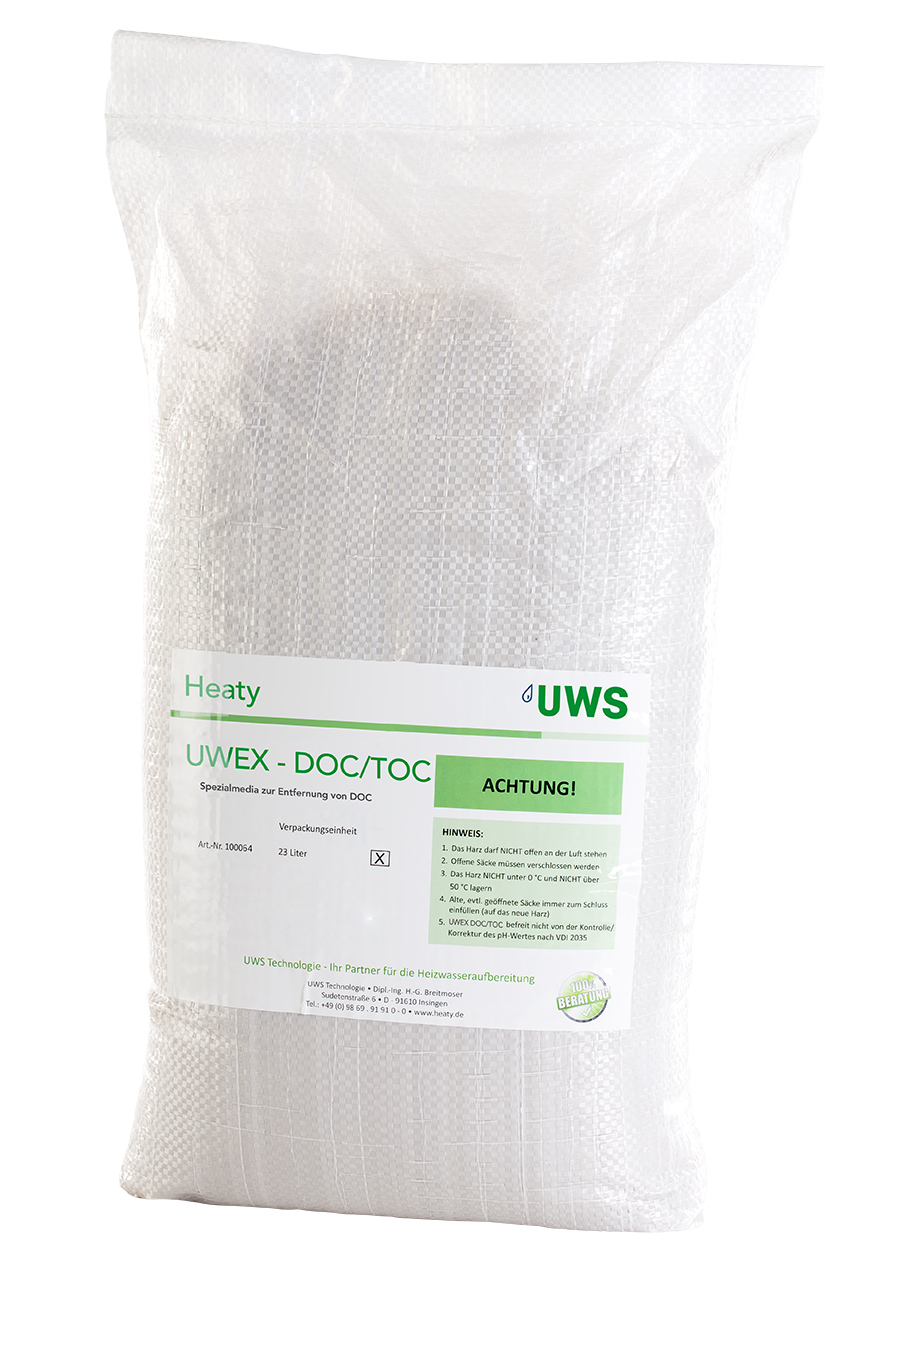 UWS Heaty UWEX-DOC/TOC Spezialmedia zur Entfernung von DOC